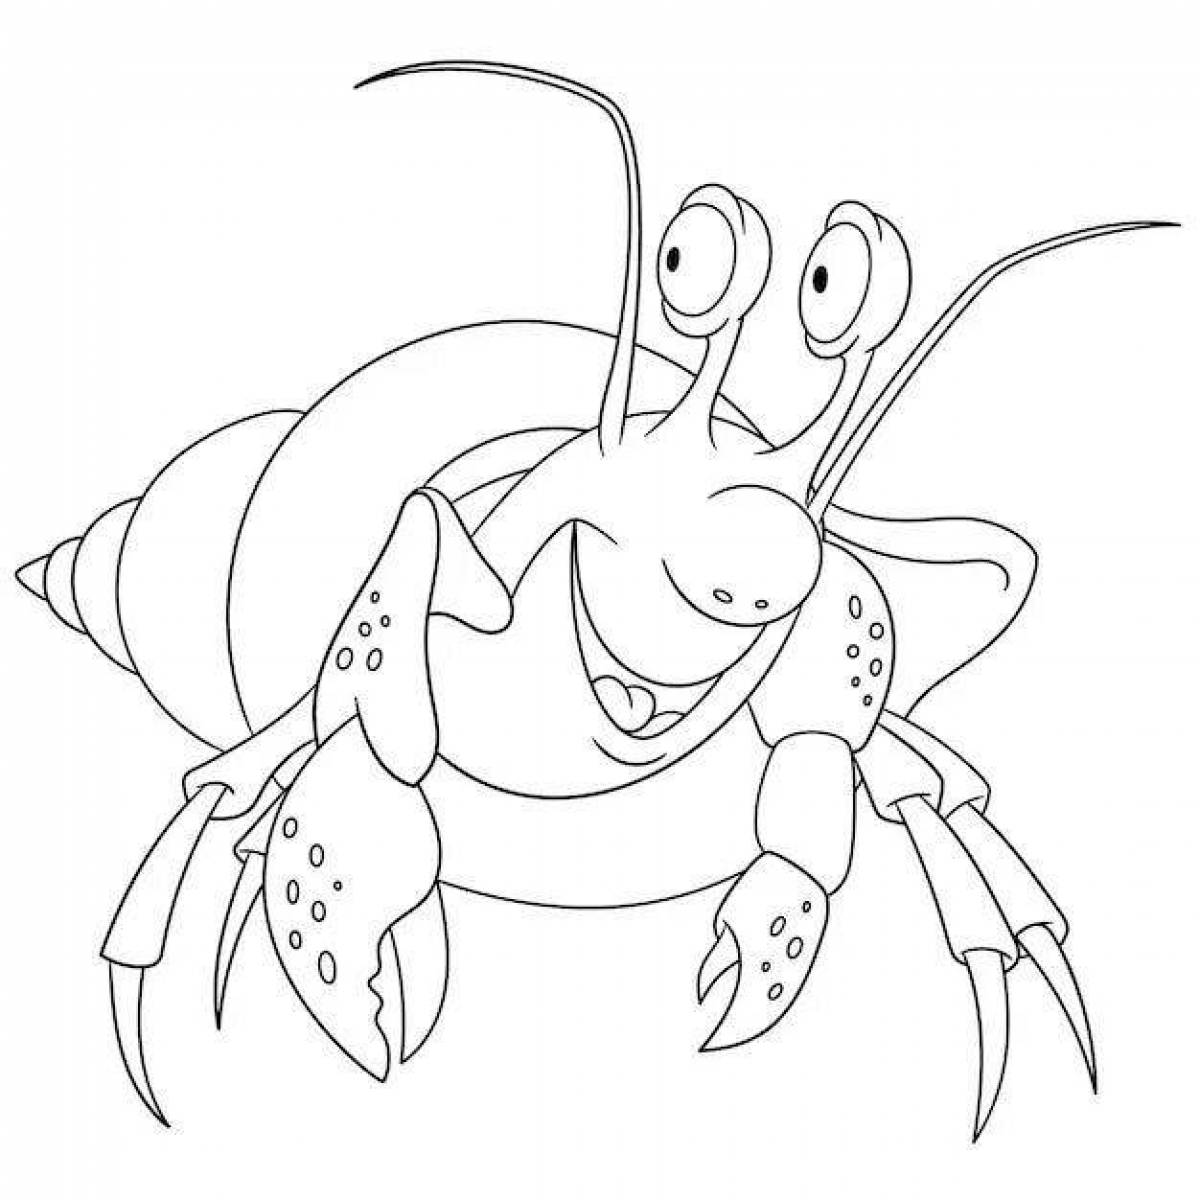 Impressive hermit crab coloring page